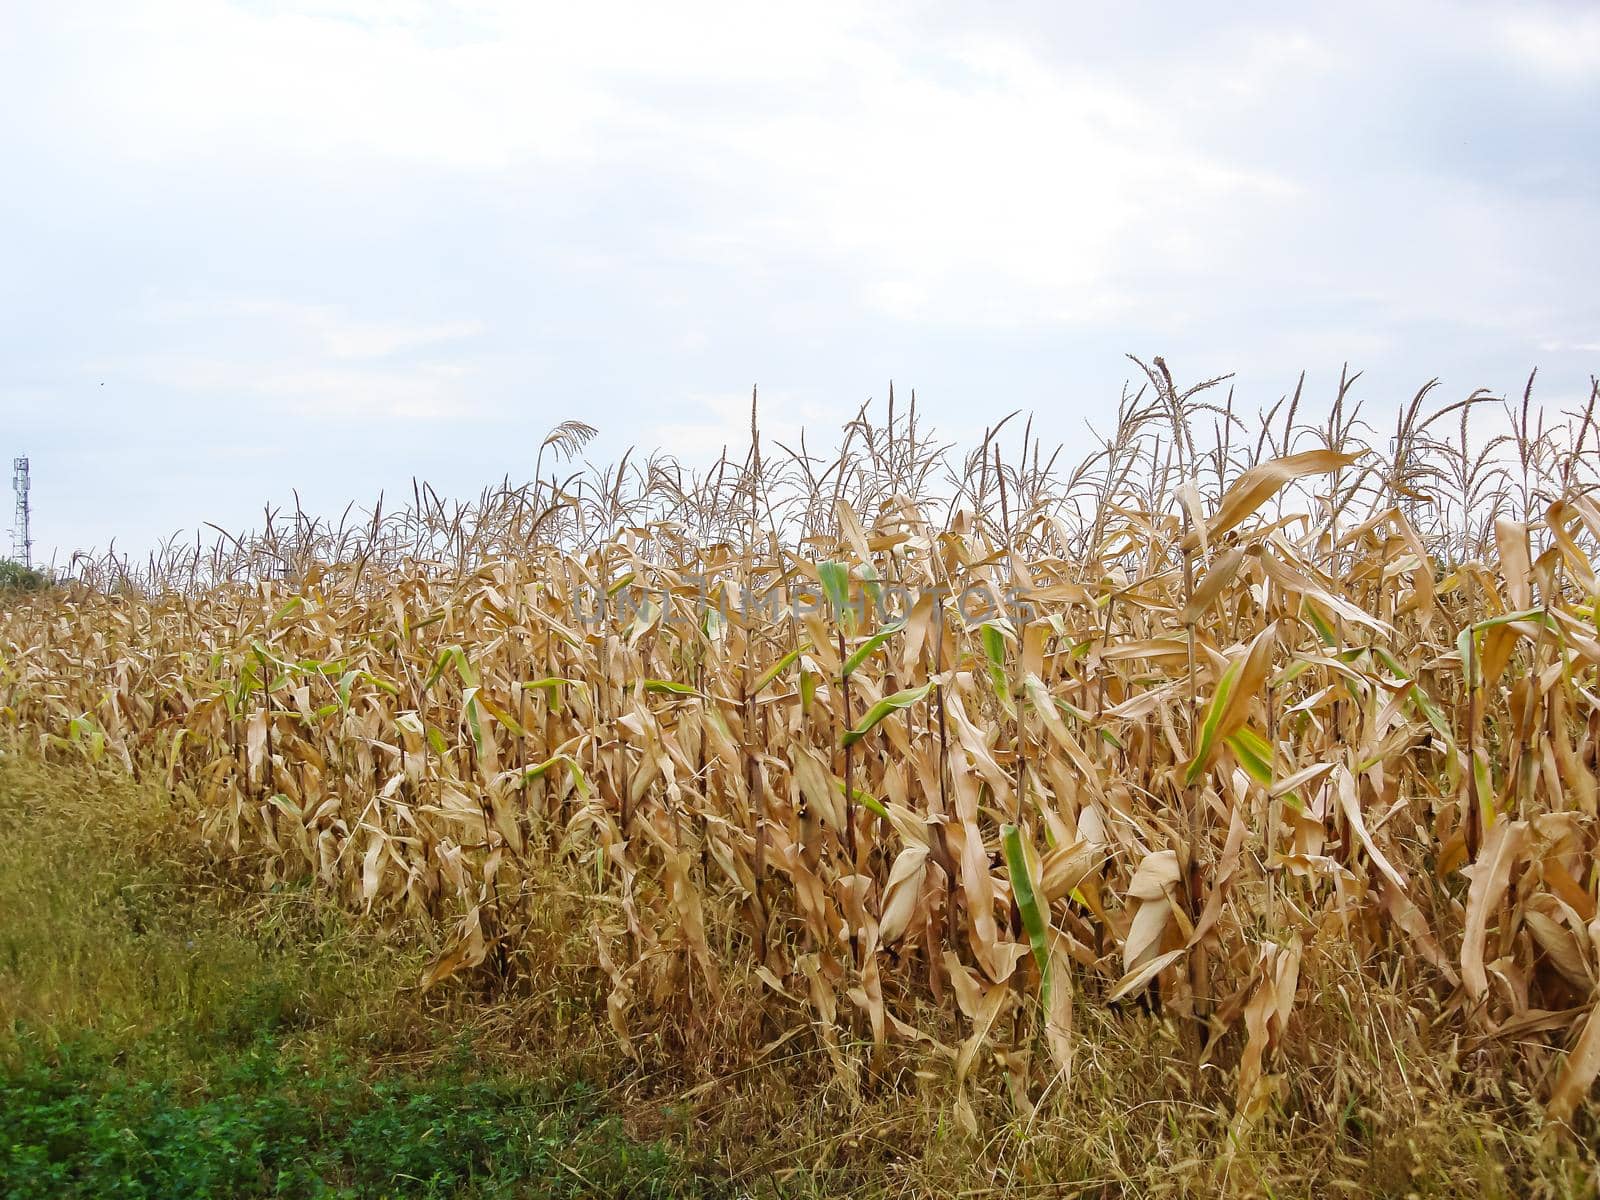 Dry corn field, dry corn stalks, end of season.